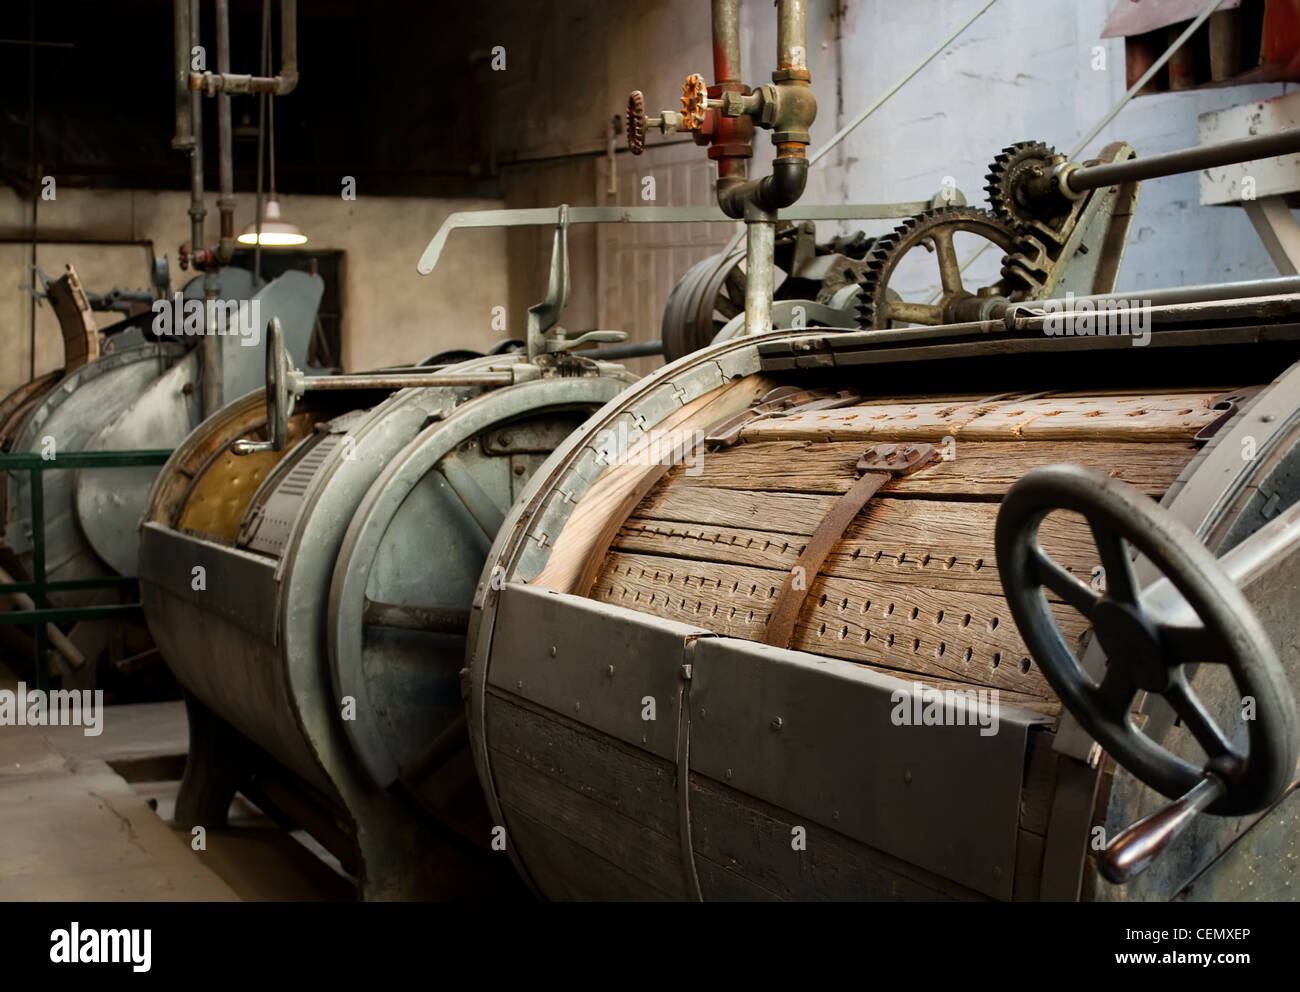 Large laundry machine at a history idaho prison. Stock Photo